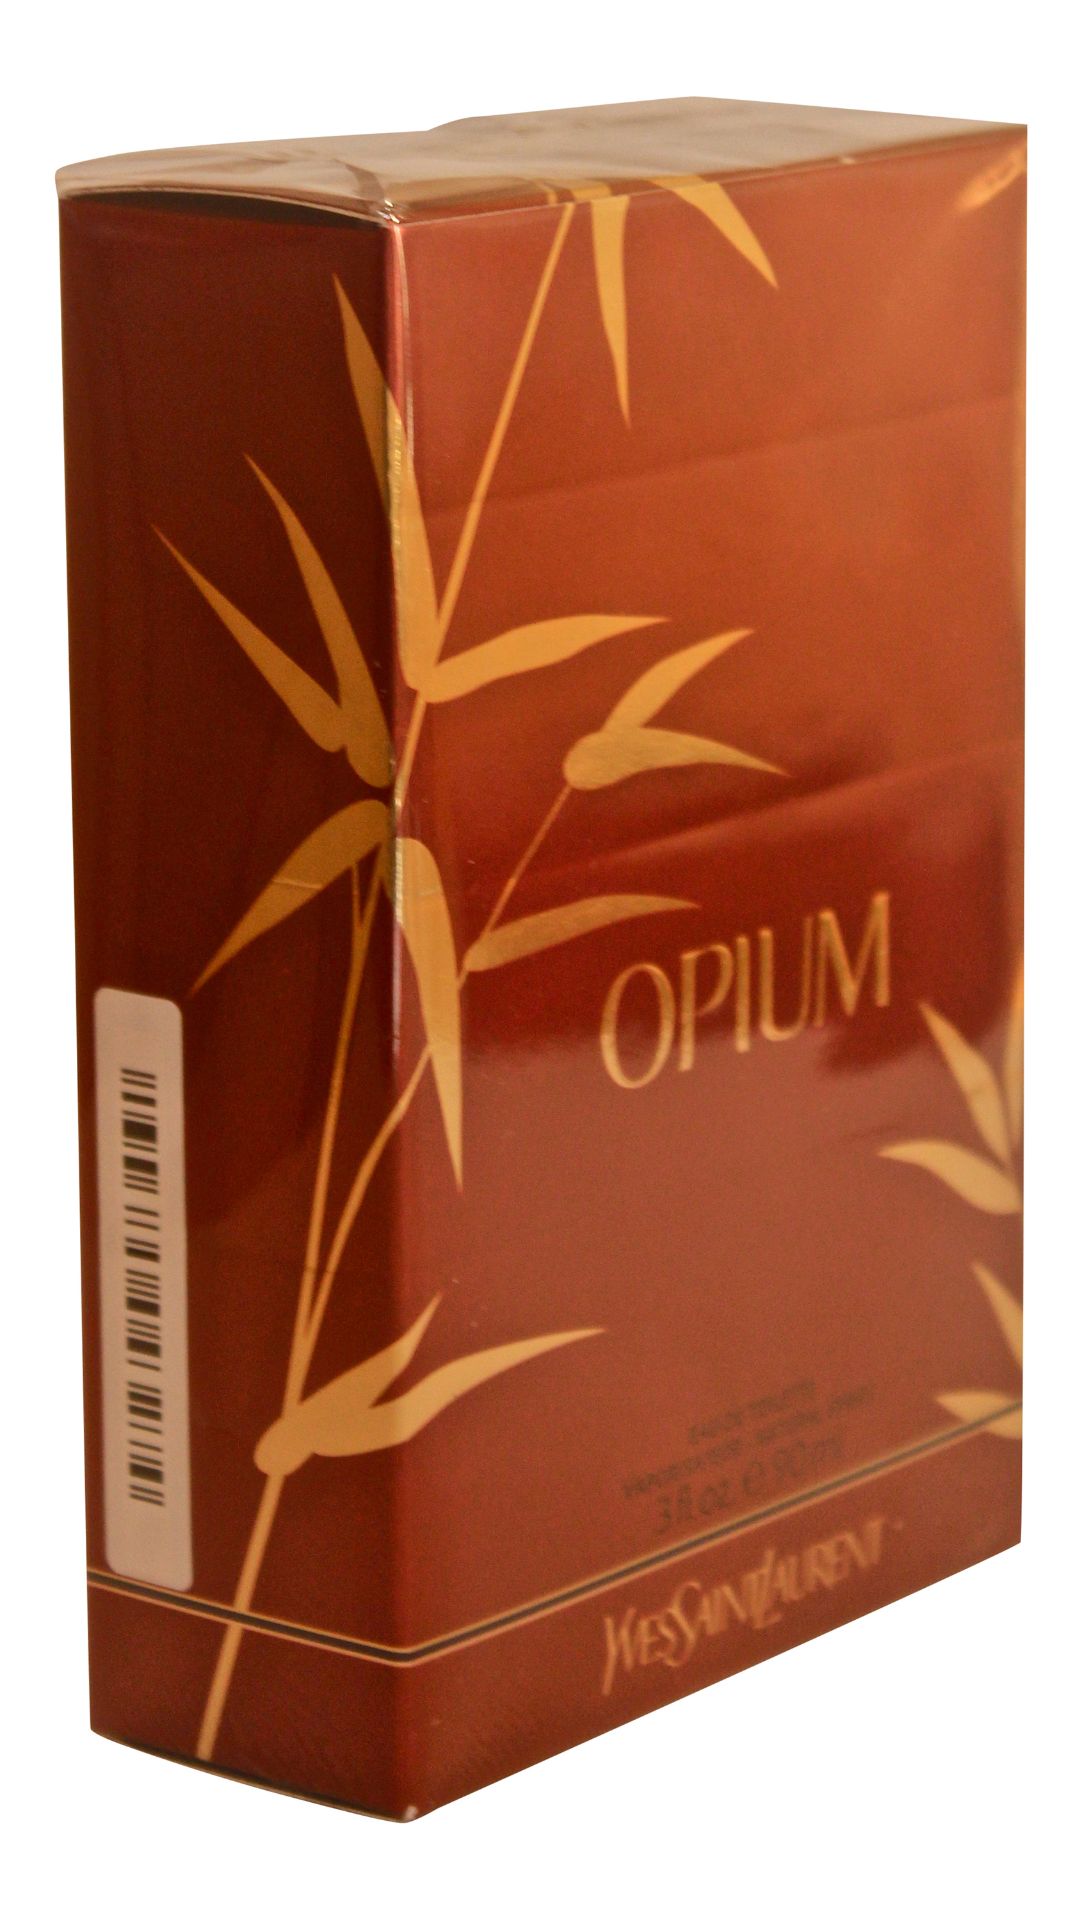 YSL Opium 90ml EDT Spray for Women x 1 Unit - Image 2 of 2